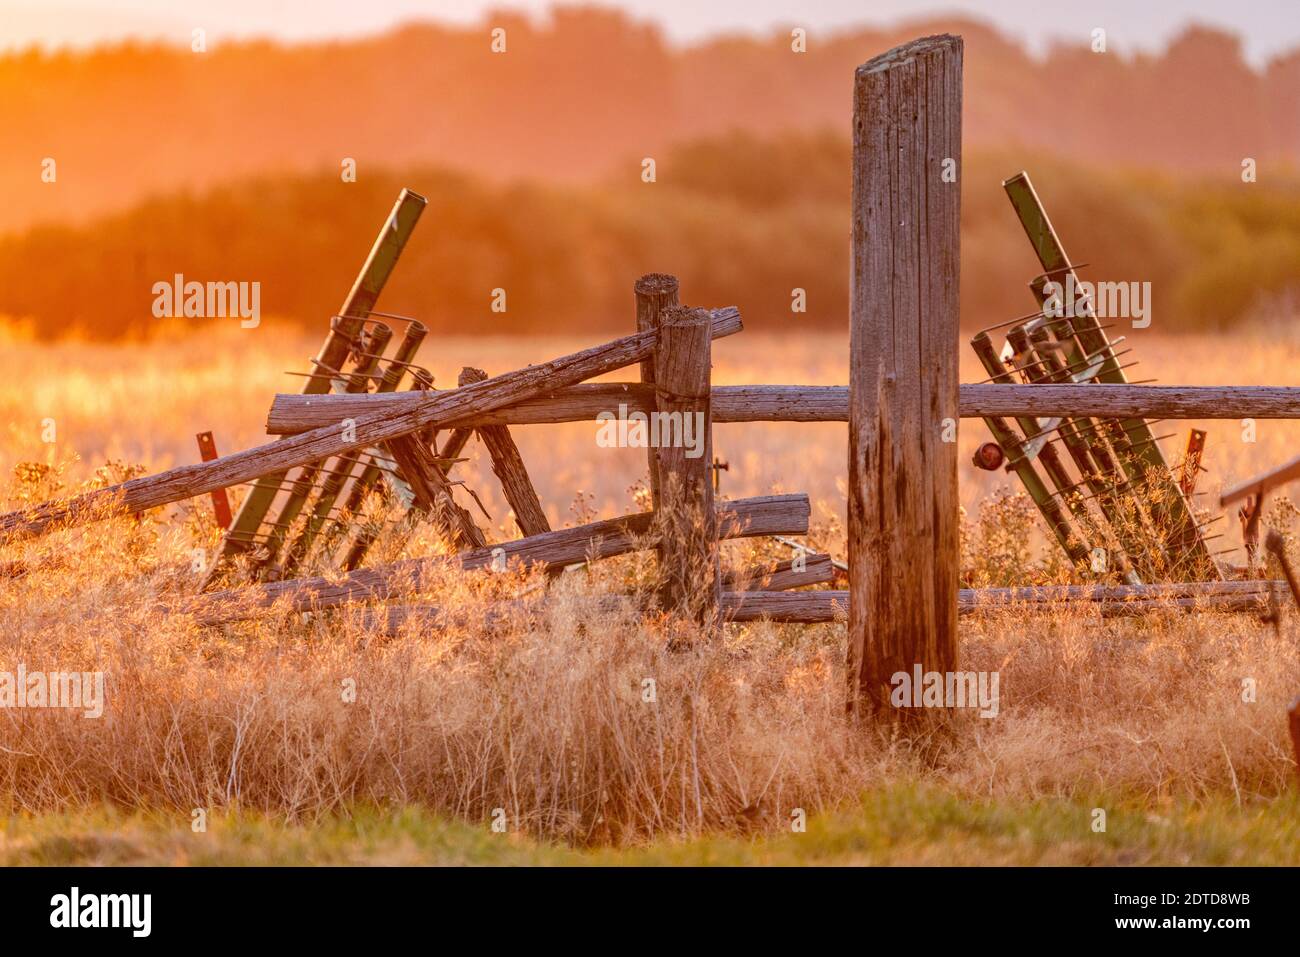 USA, Idaho, Bellevue, Damaged wooden fence Stock Photo